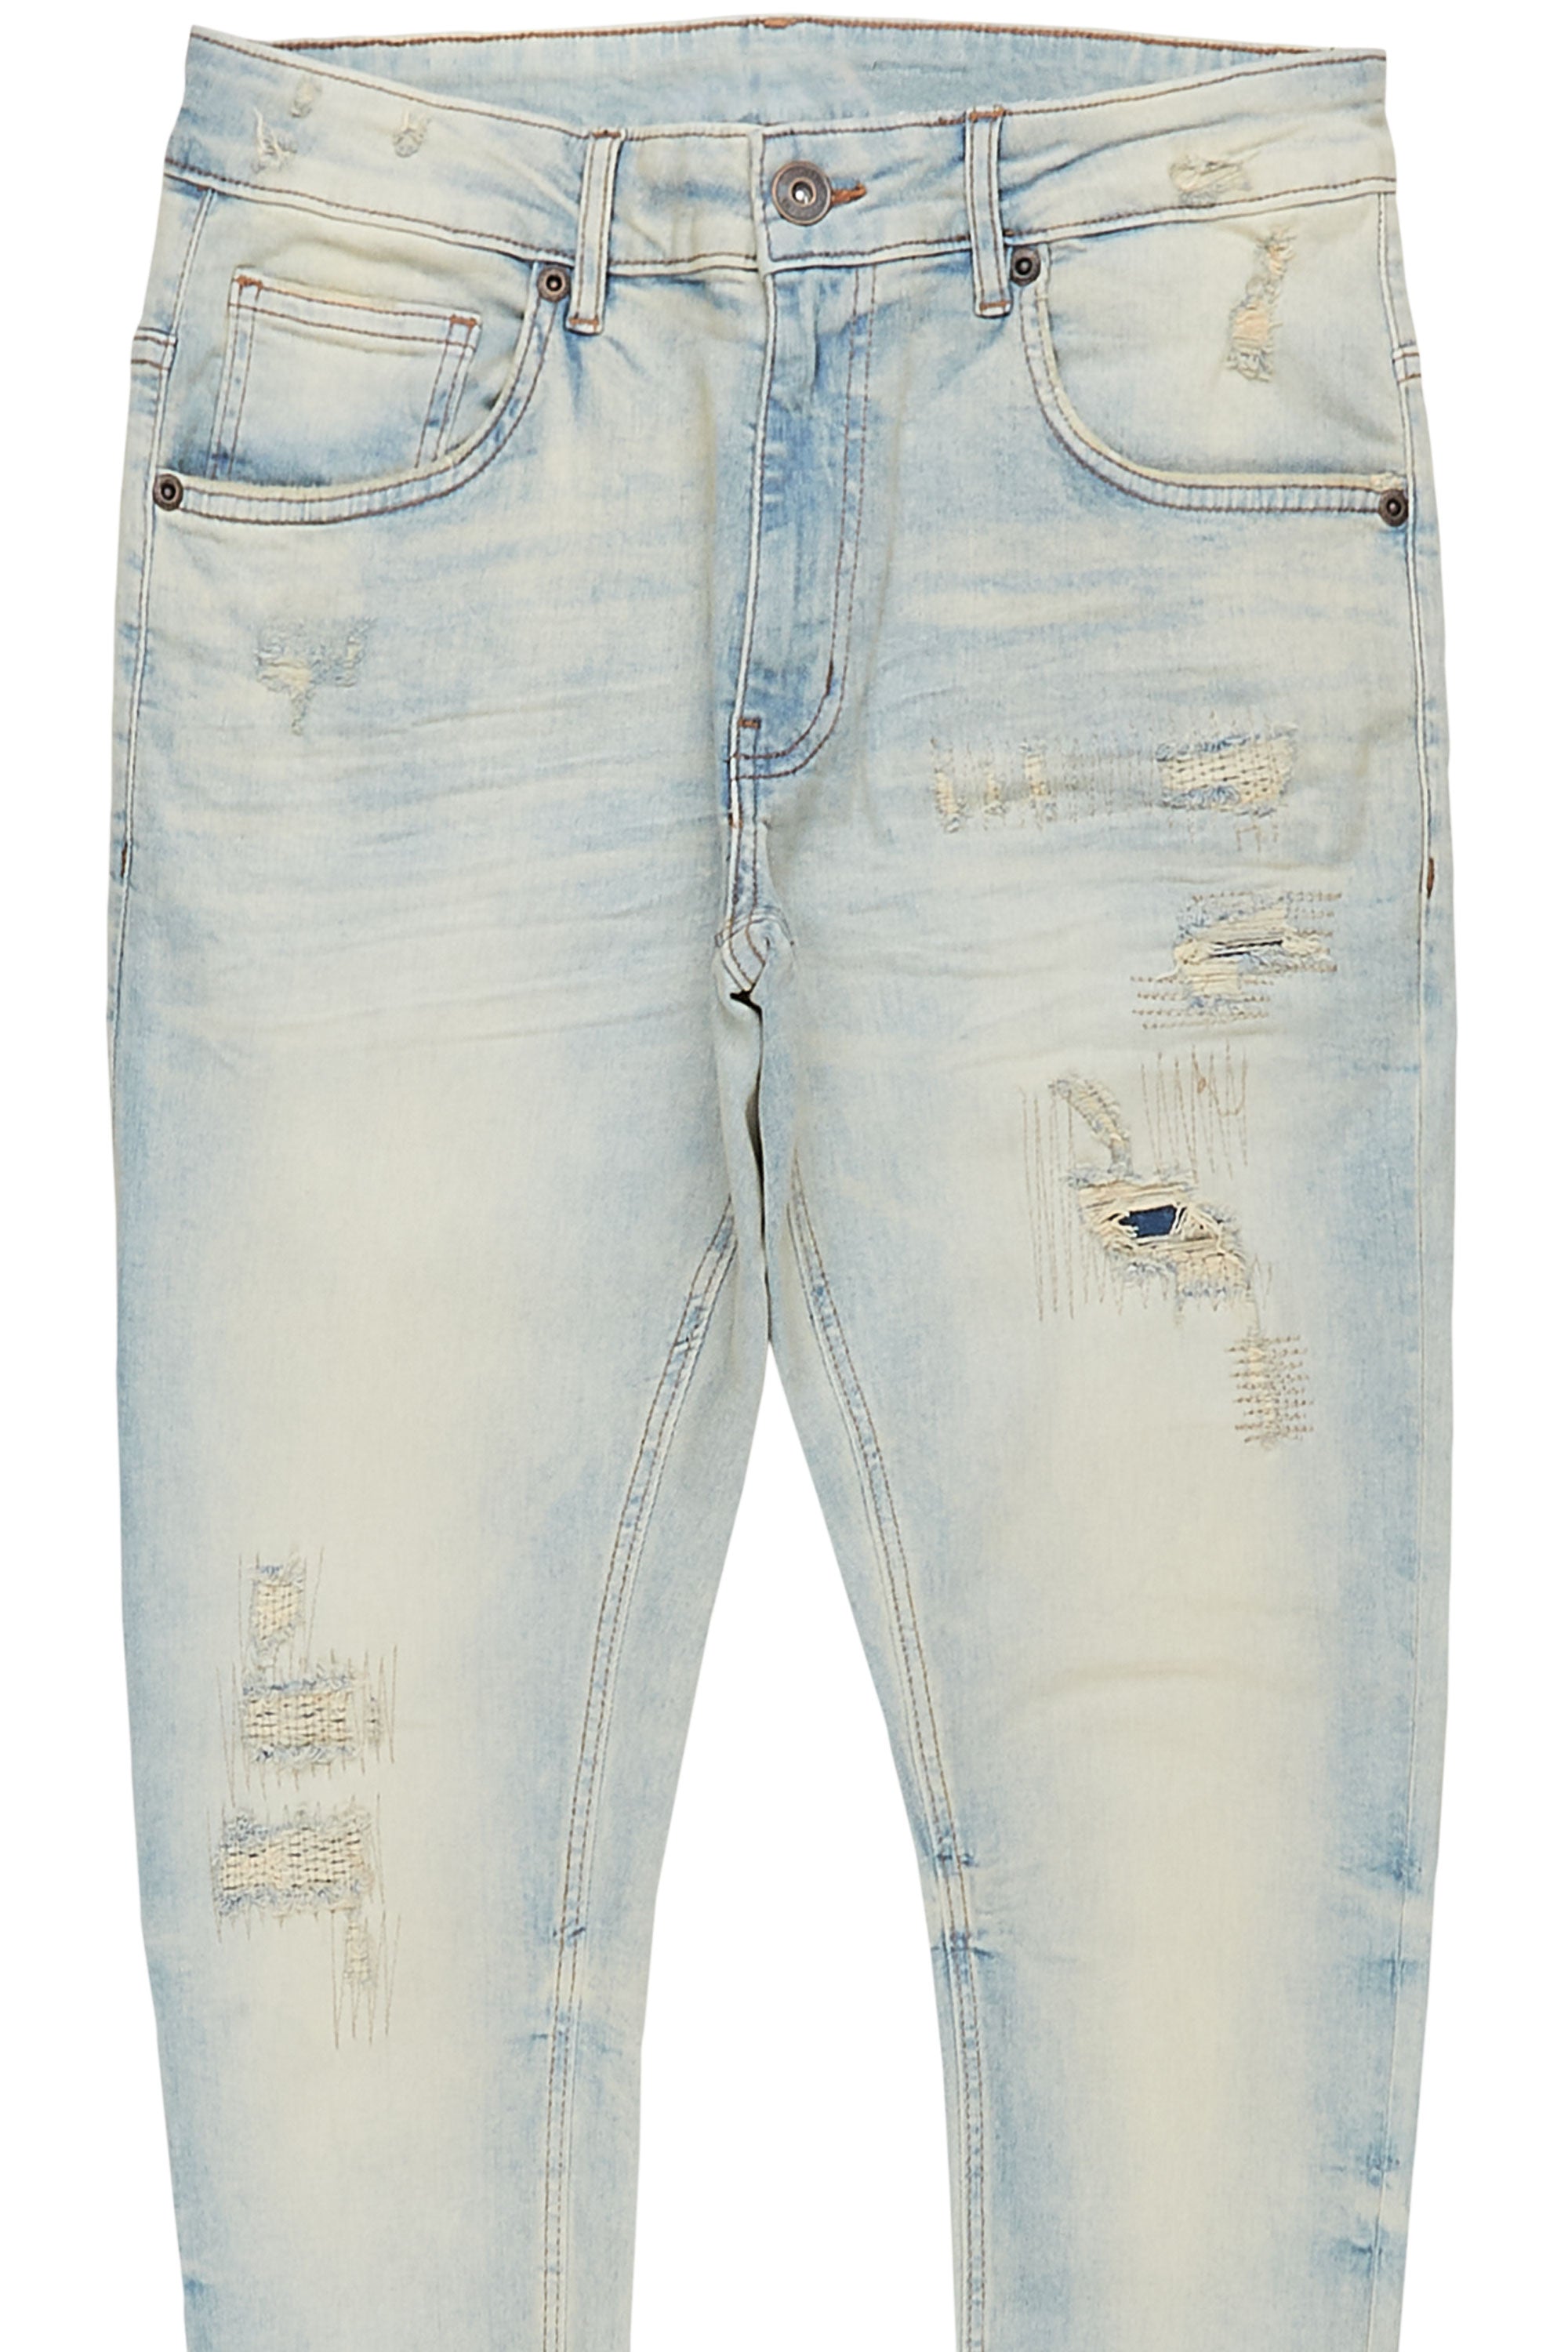 Sebas Sand Blue 5 Pocket Jean